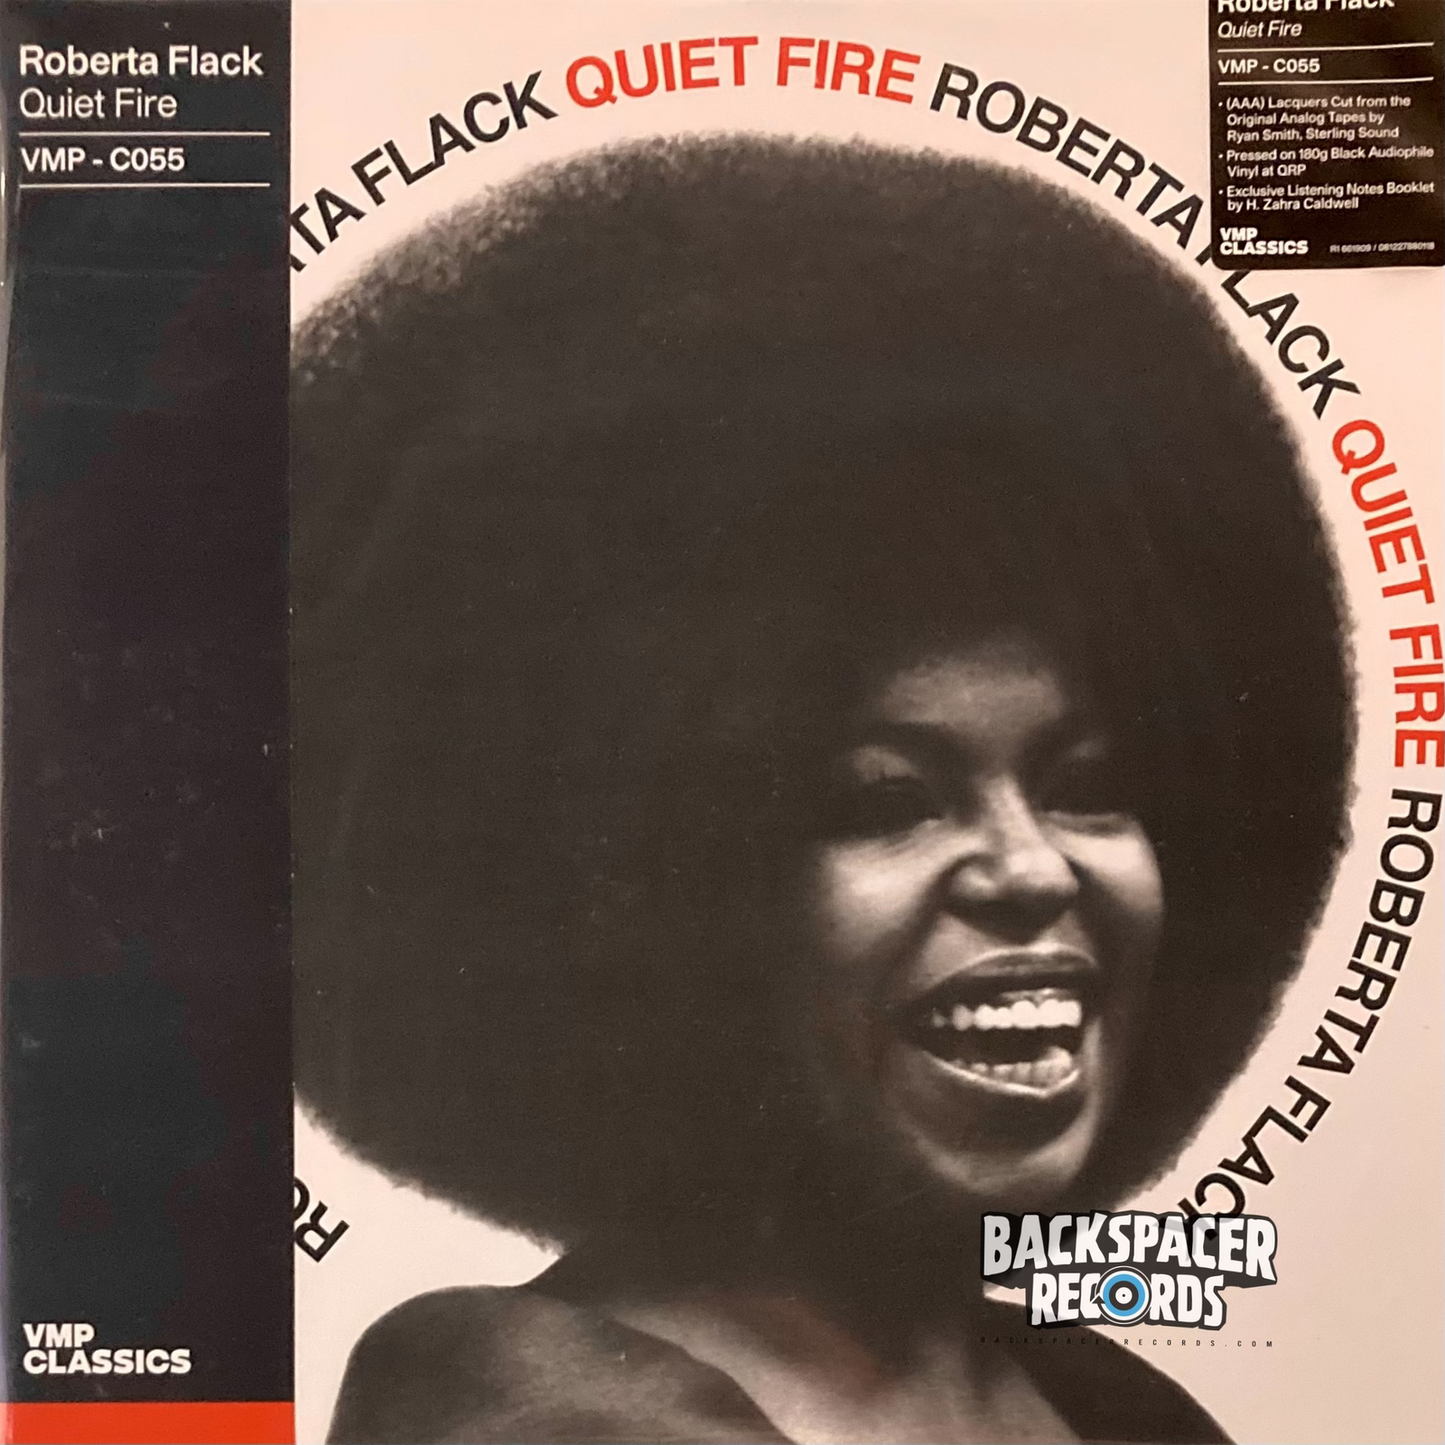 Roberta Flack – Quiet Fire (VMP Exclusive) LP (Sealed)